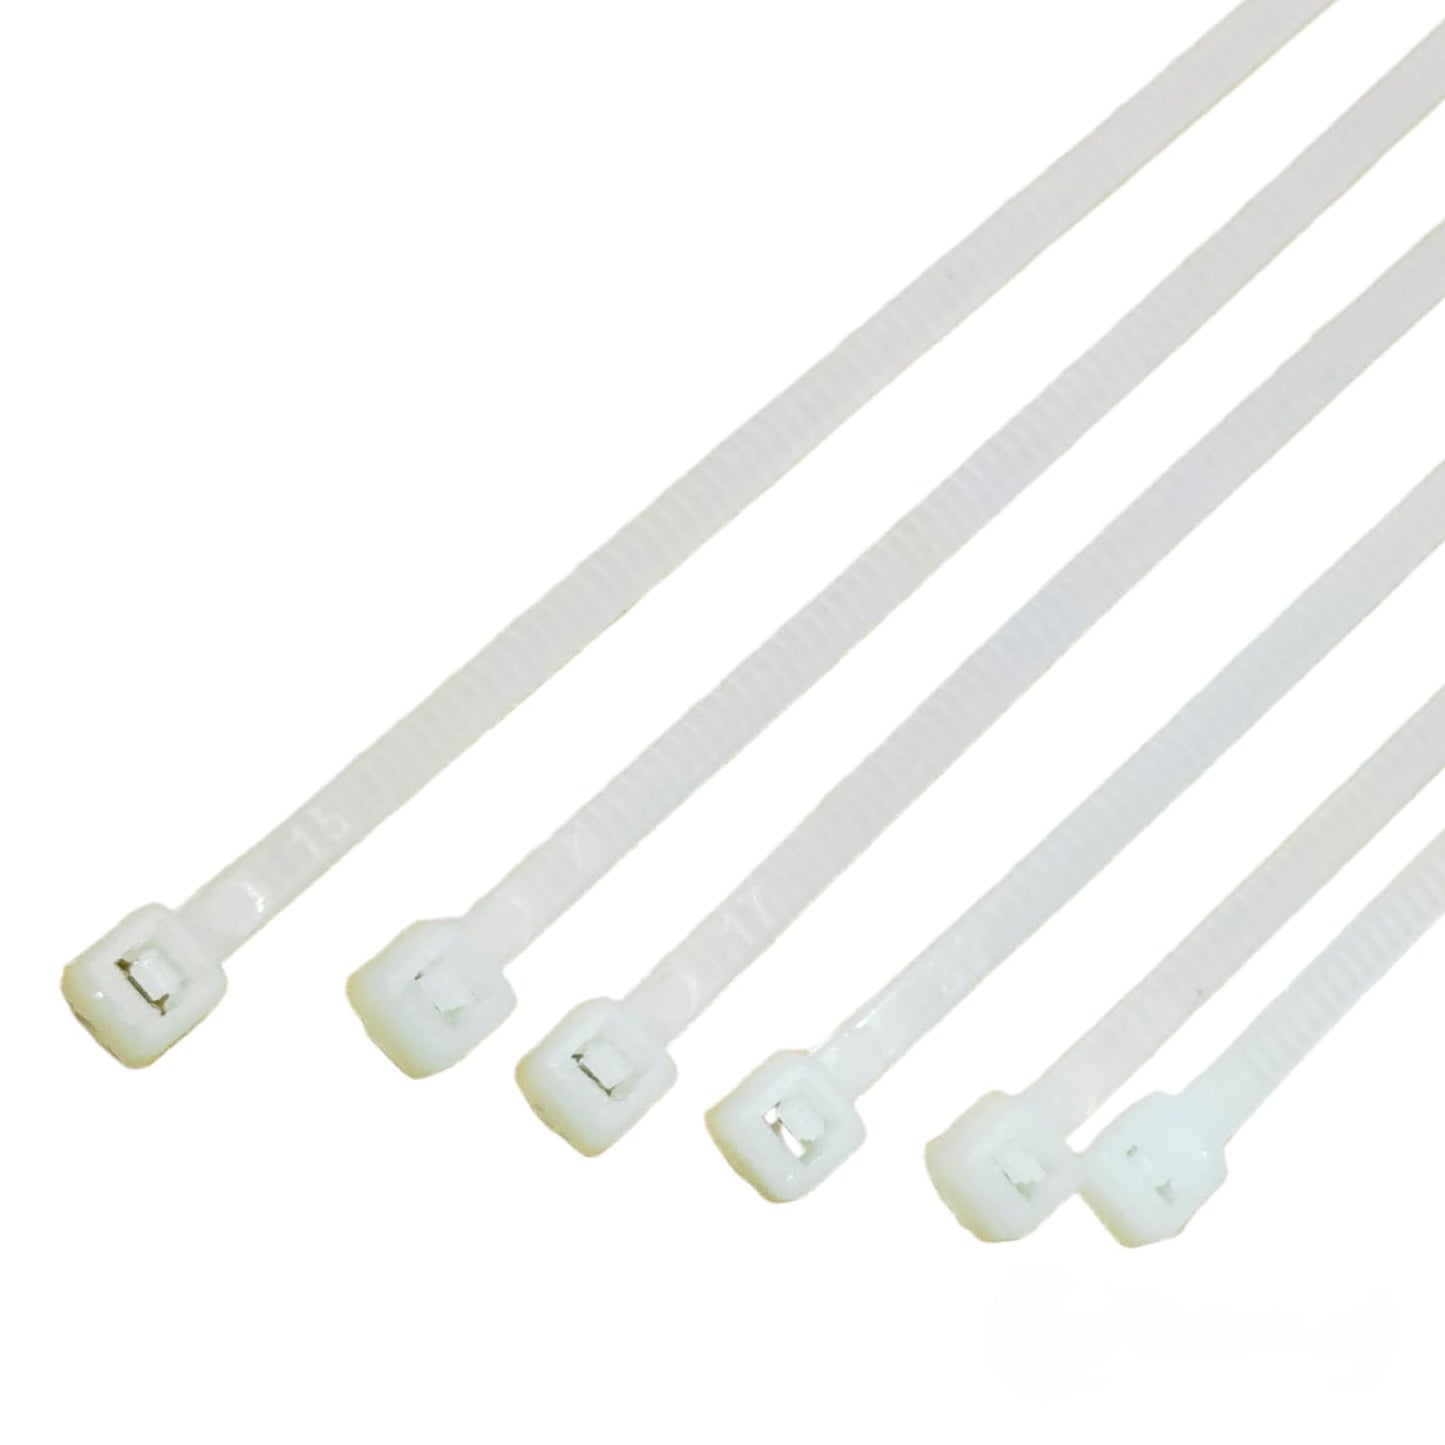 8 inch ZIP Tie Pack of 10 | Self Locking Cable (Buy 50 & Get 5 Free)